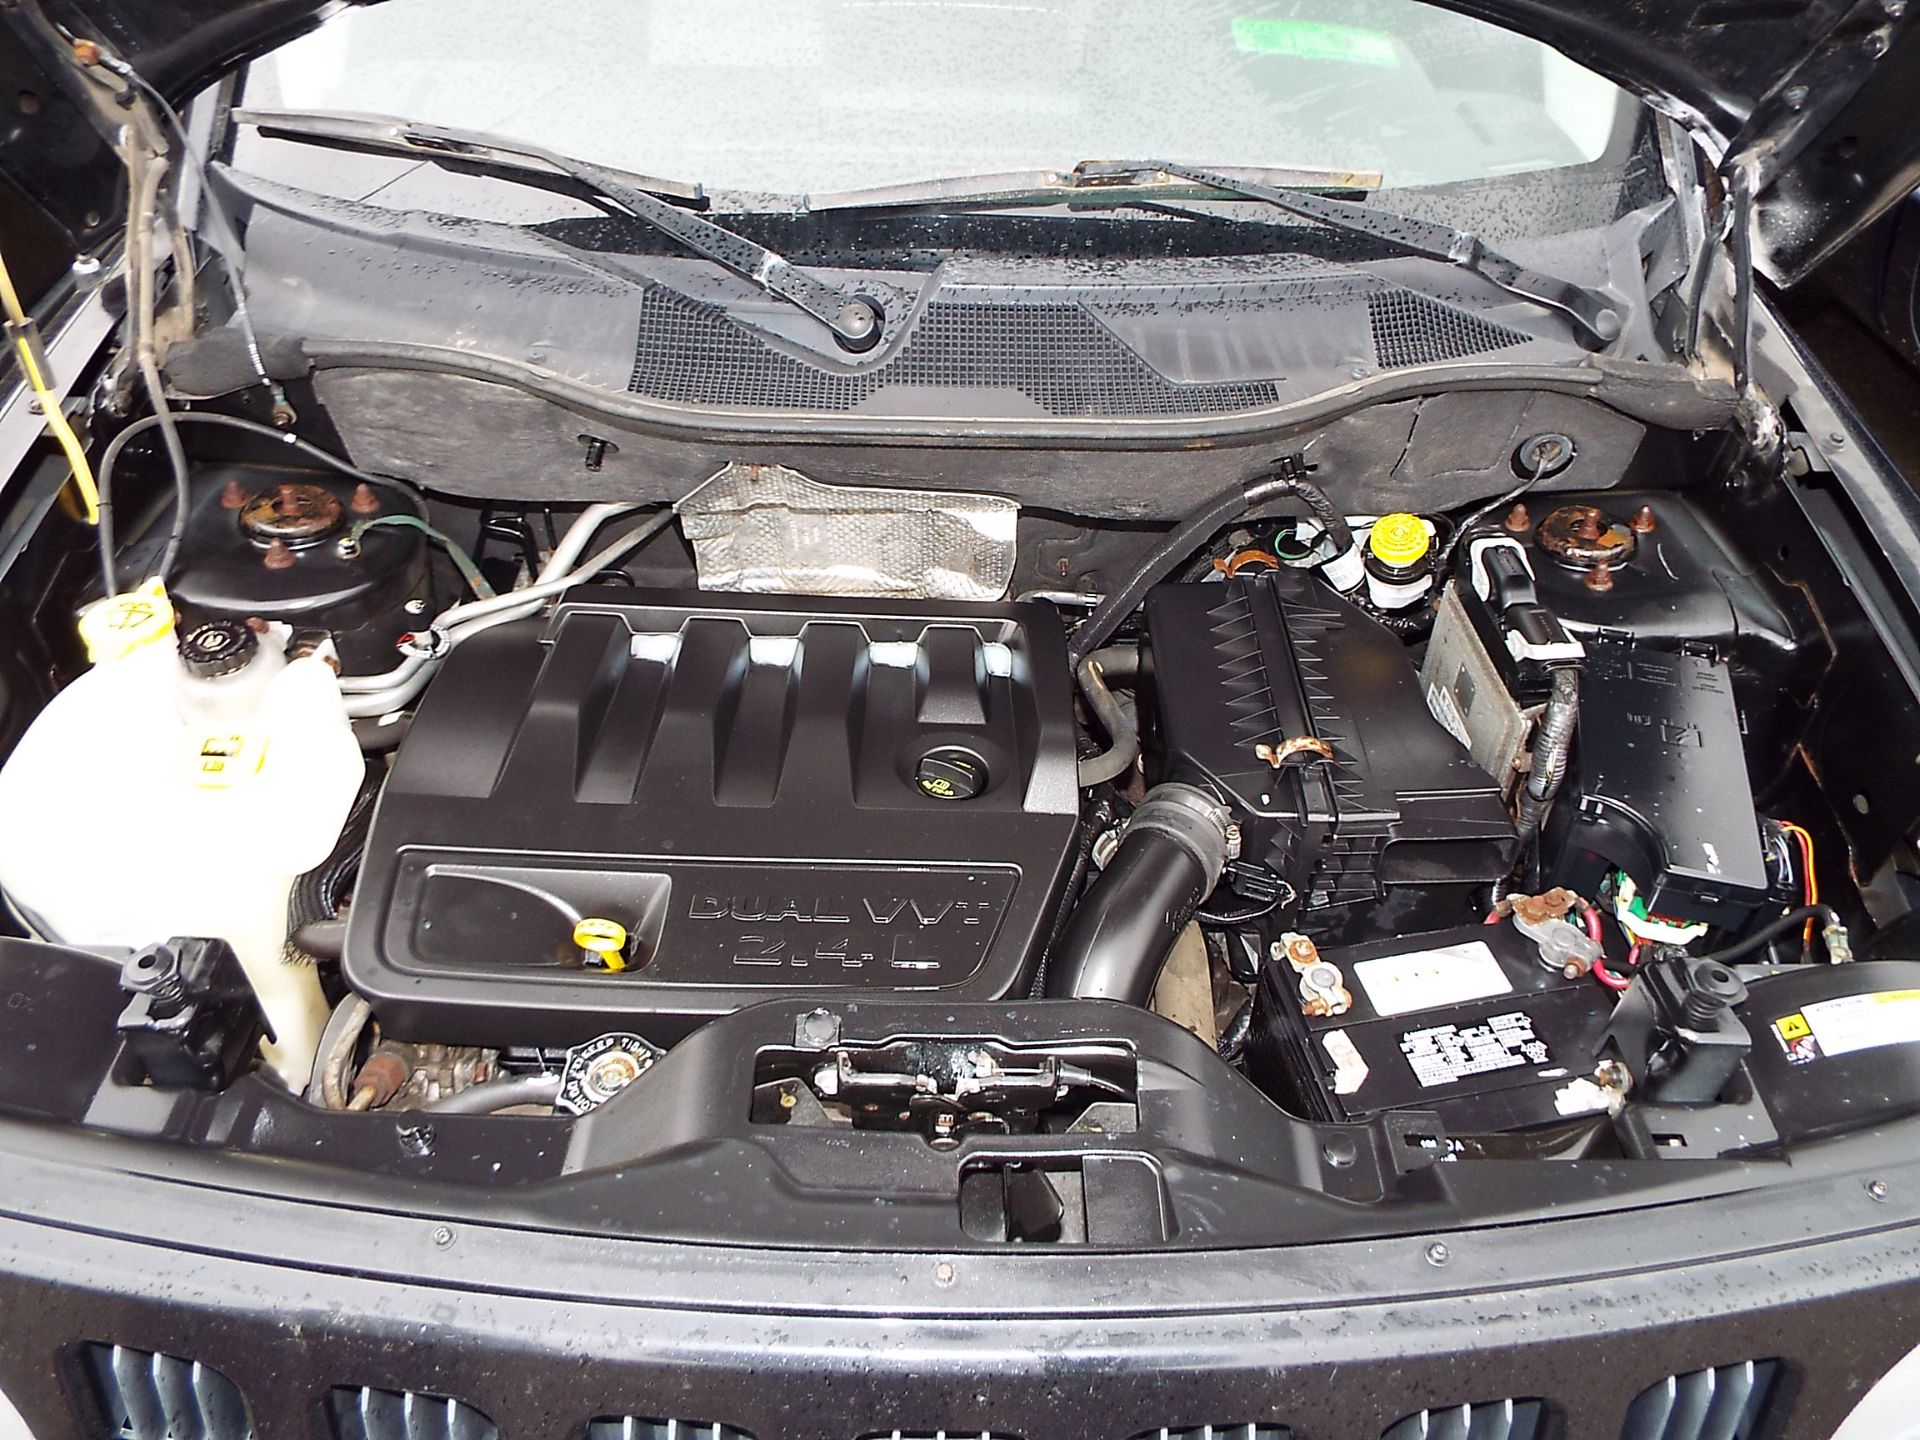 JEEP (2008) PATRIOT SUV, 2.4 LITER L4 ENGINE, AUTO, 4X4, POWER LOCKS, POWER WINDOWS, KEYLESS - Image 3 of 4